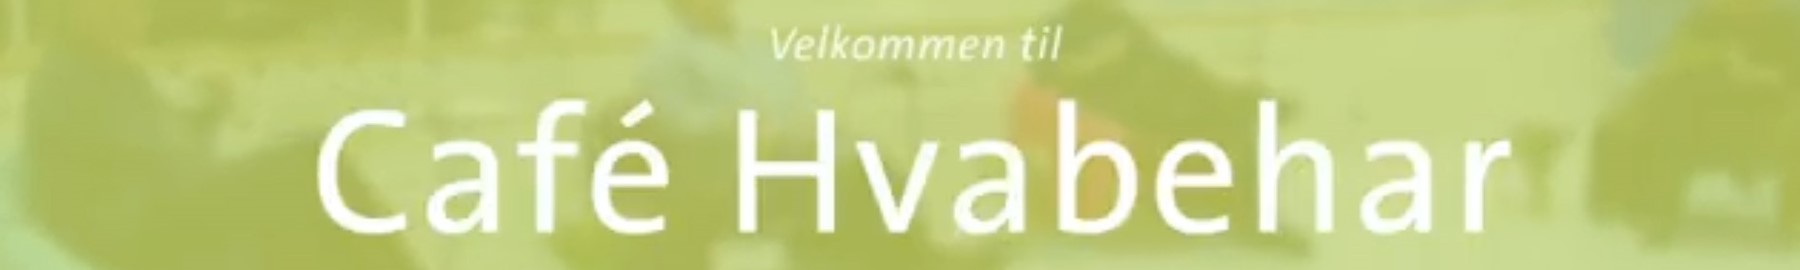 VERDENS HØREDAG 2021: Café Hvabehar